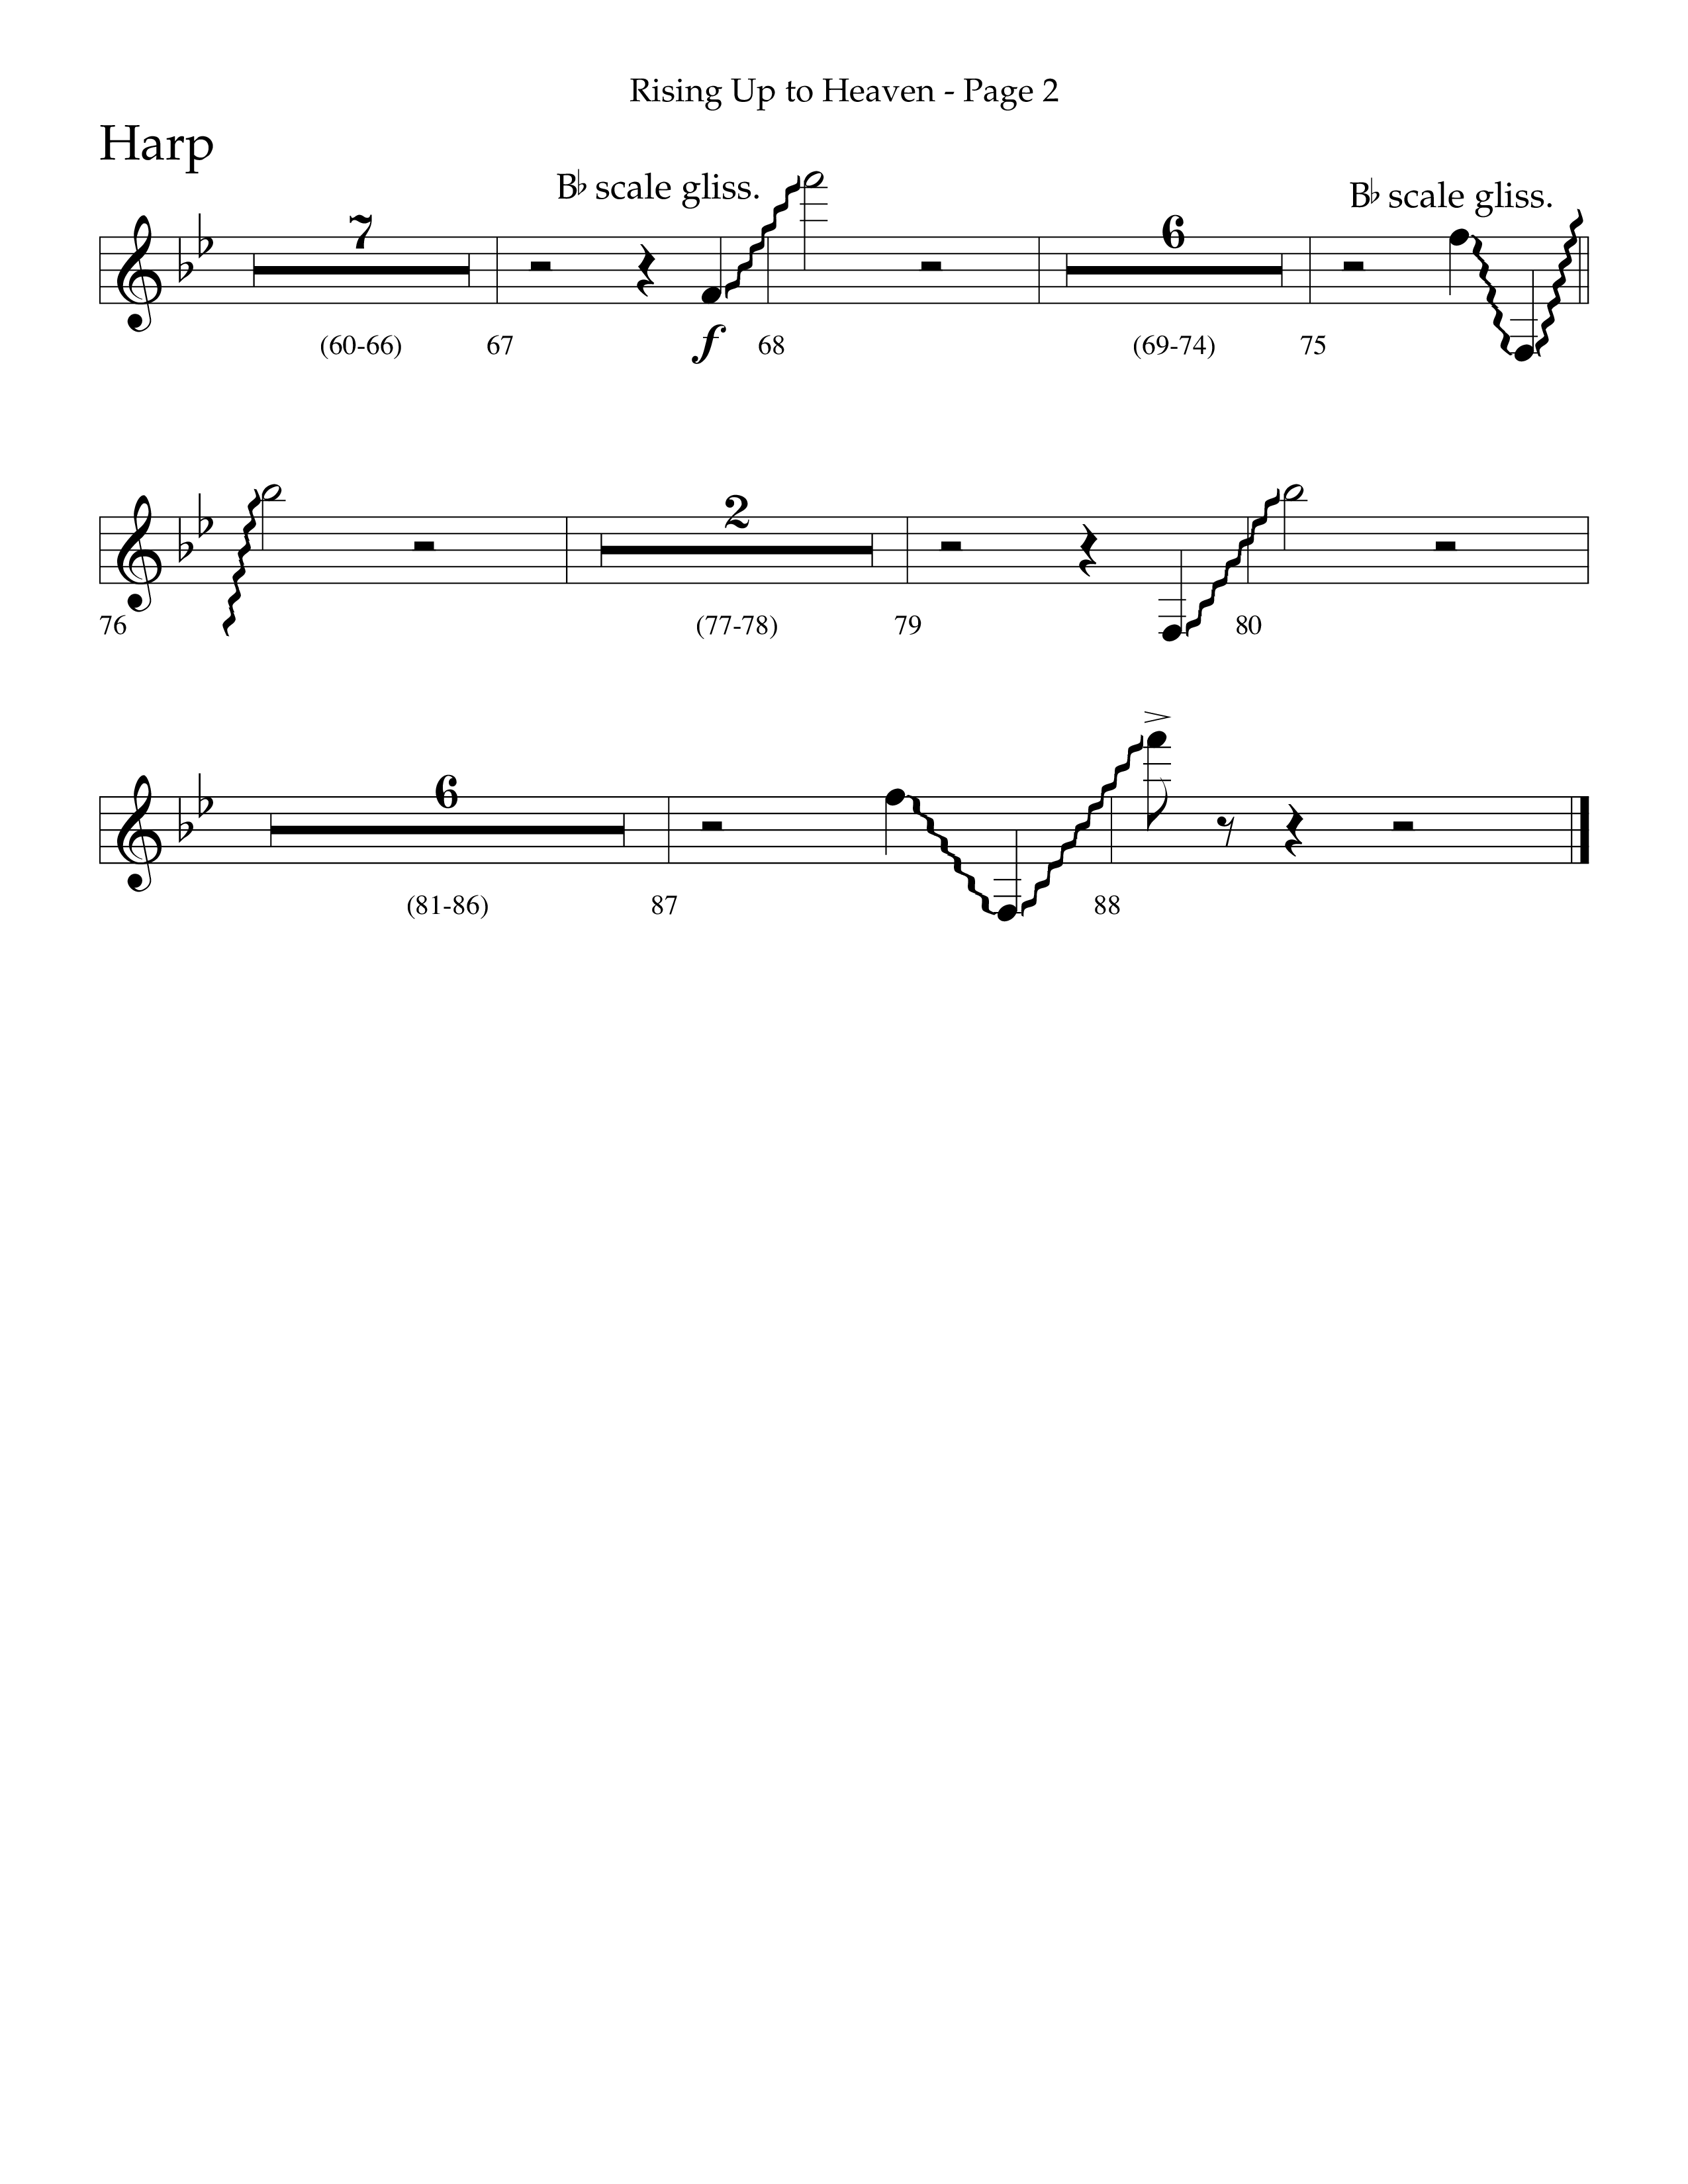 Rising Up To Heaven (Choral Anthem SATB) Harp (Lifeway Choral / Arr. Craig Adams / Orch. Danny Zaloudik)